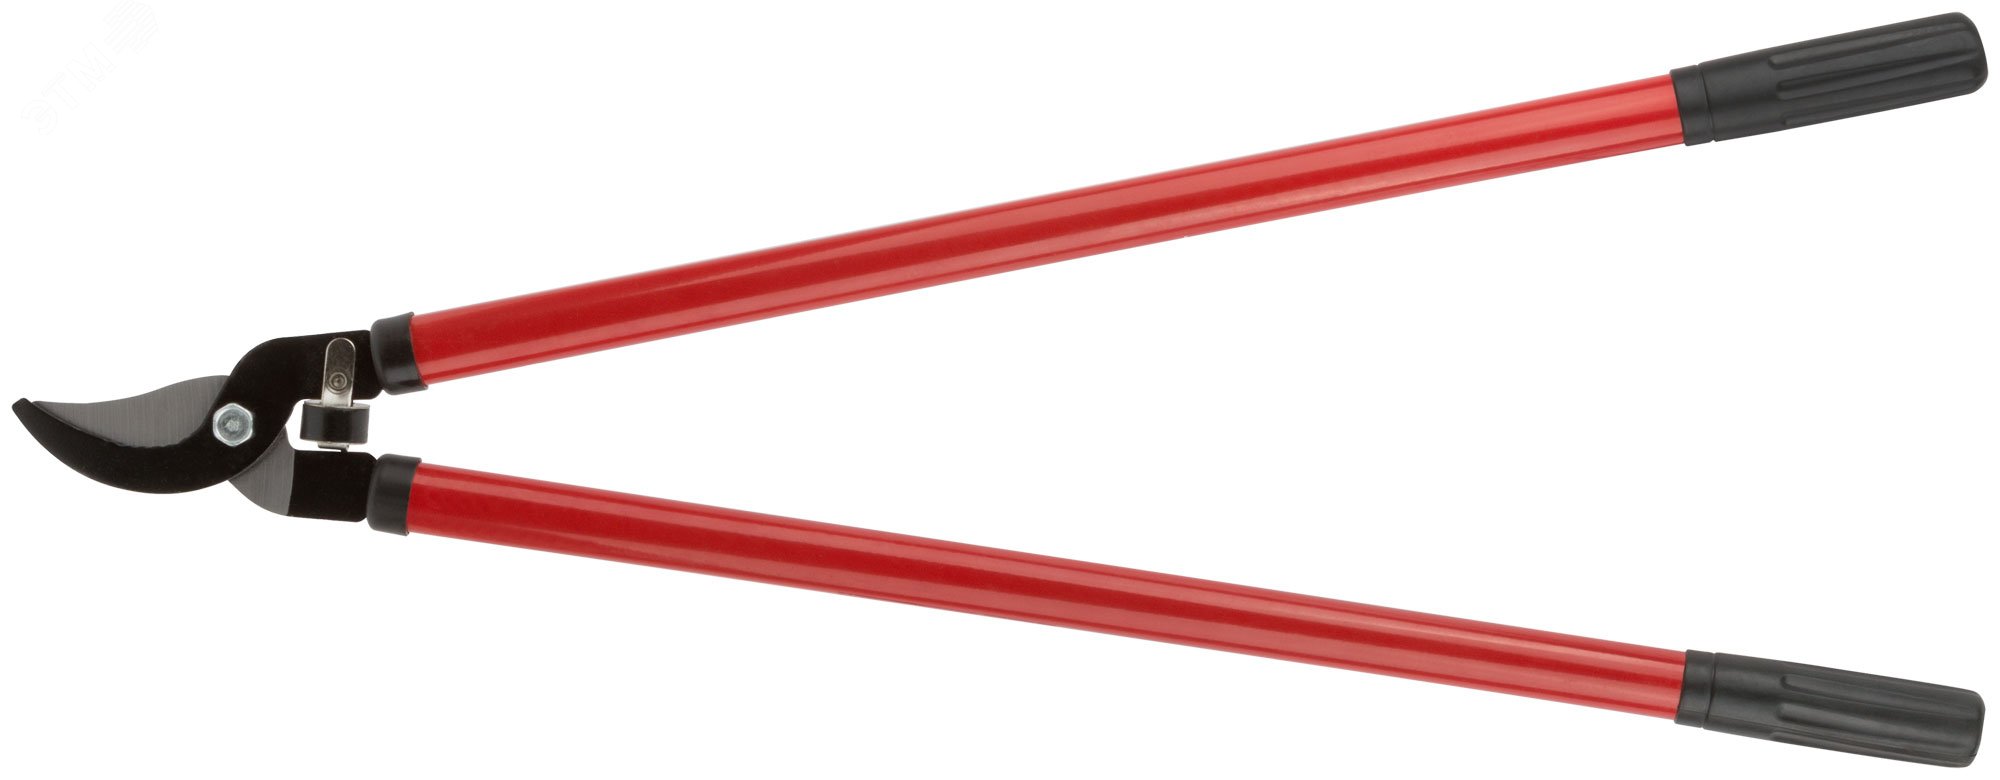 Сучкорез, лезвия 70 мм, металлические ручки с ПВХ рукоятками 700 мм 76295 КУРС - превью